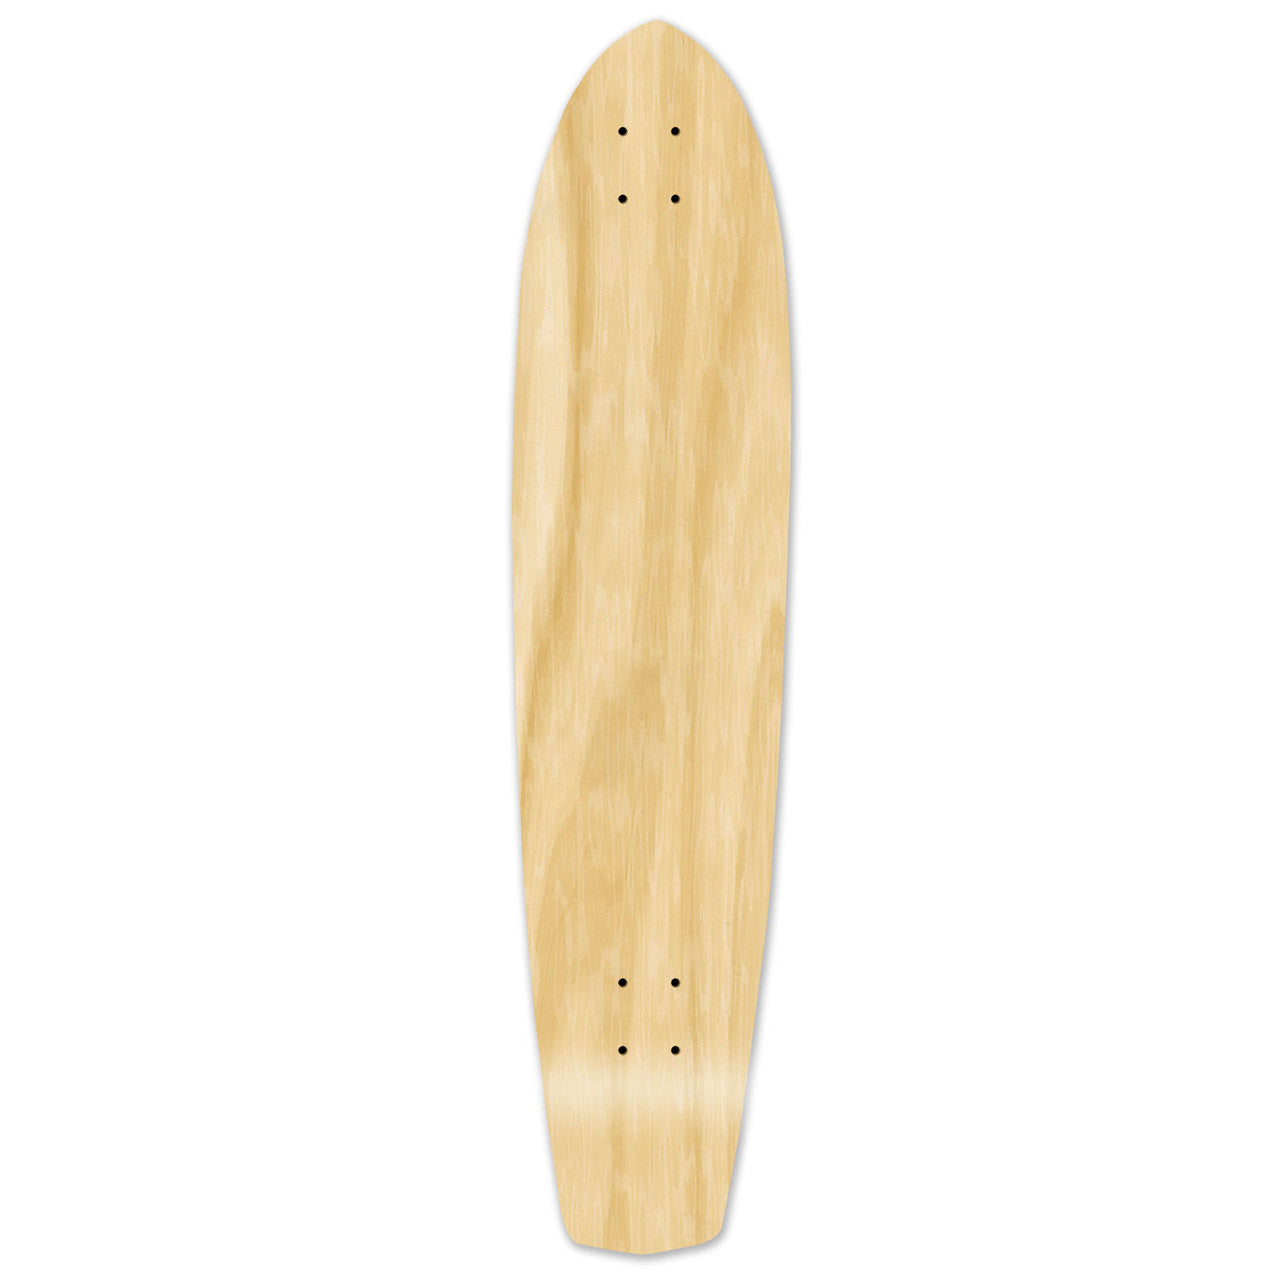 Yocaher Slimkick Longboard Deck - Natural